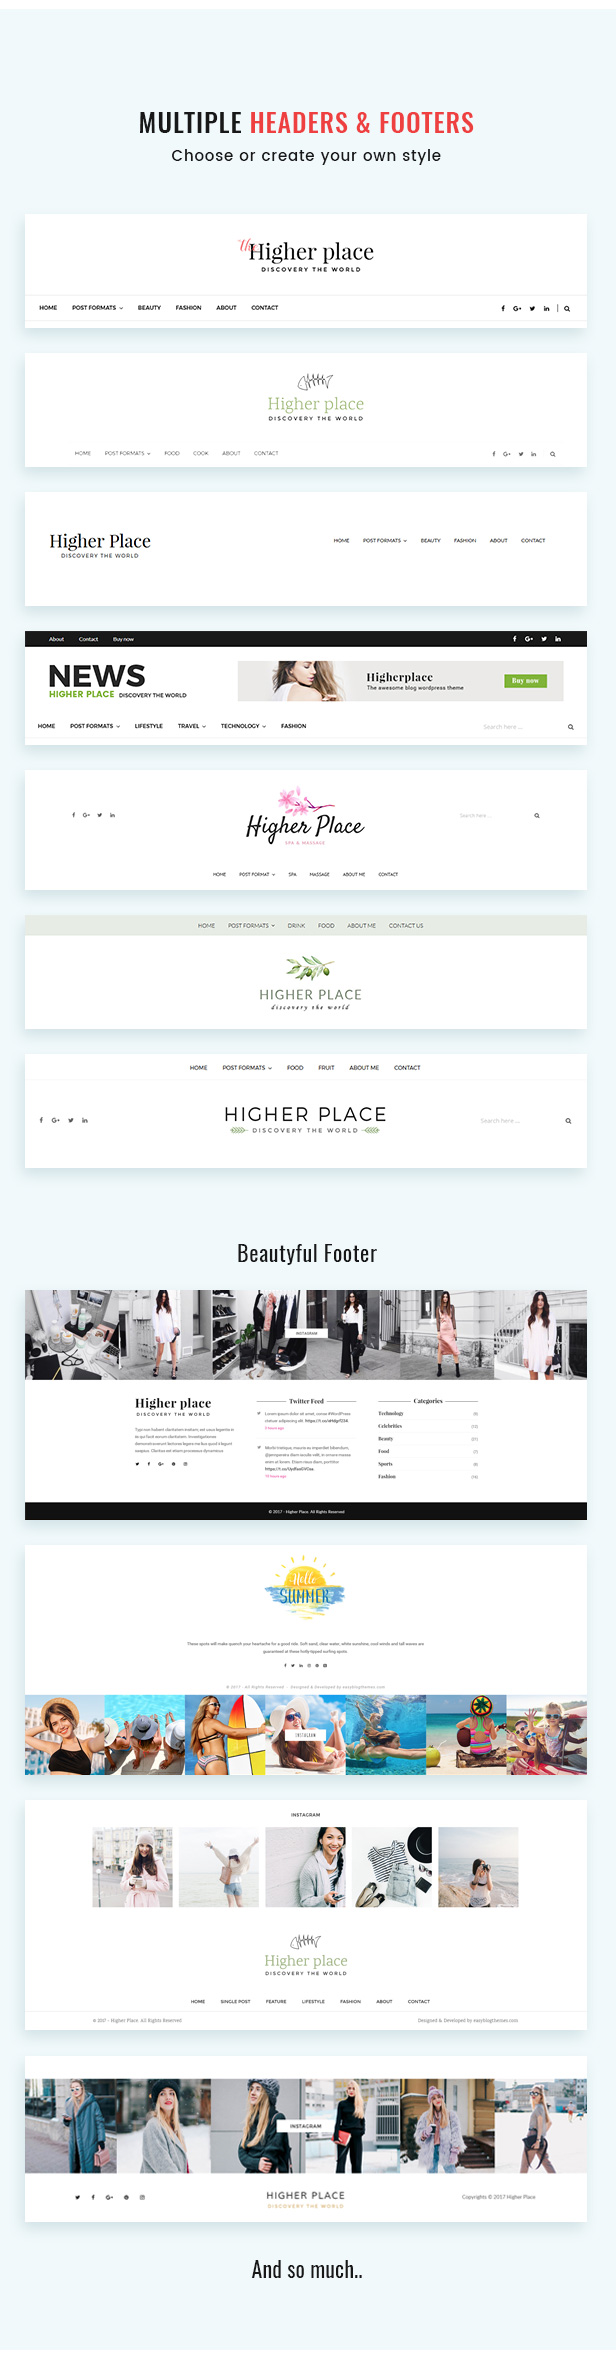 Higher Place - Blog & Magazine WordPress Theme - 20